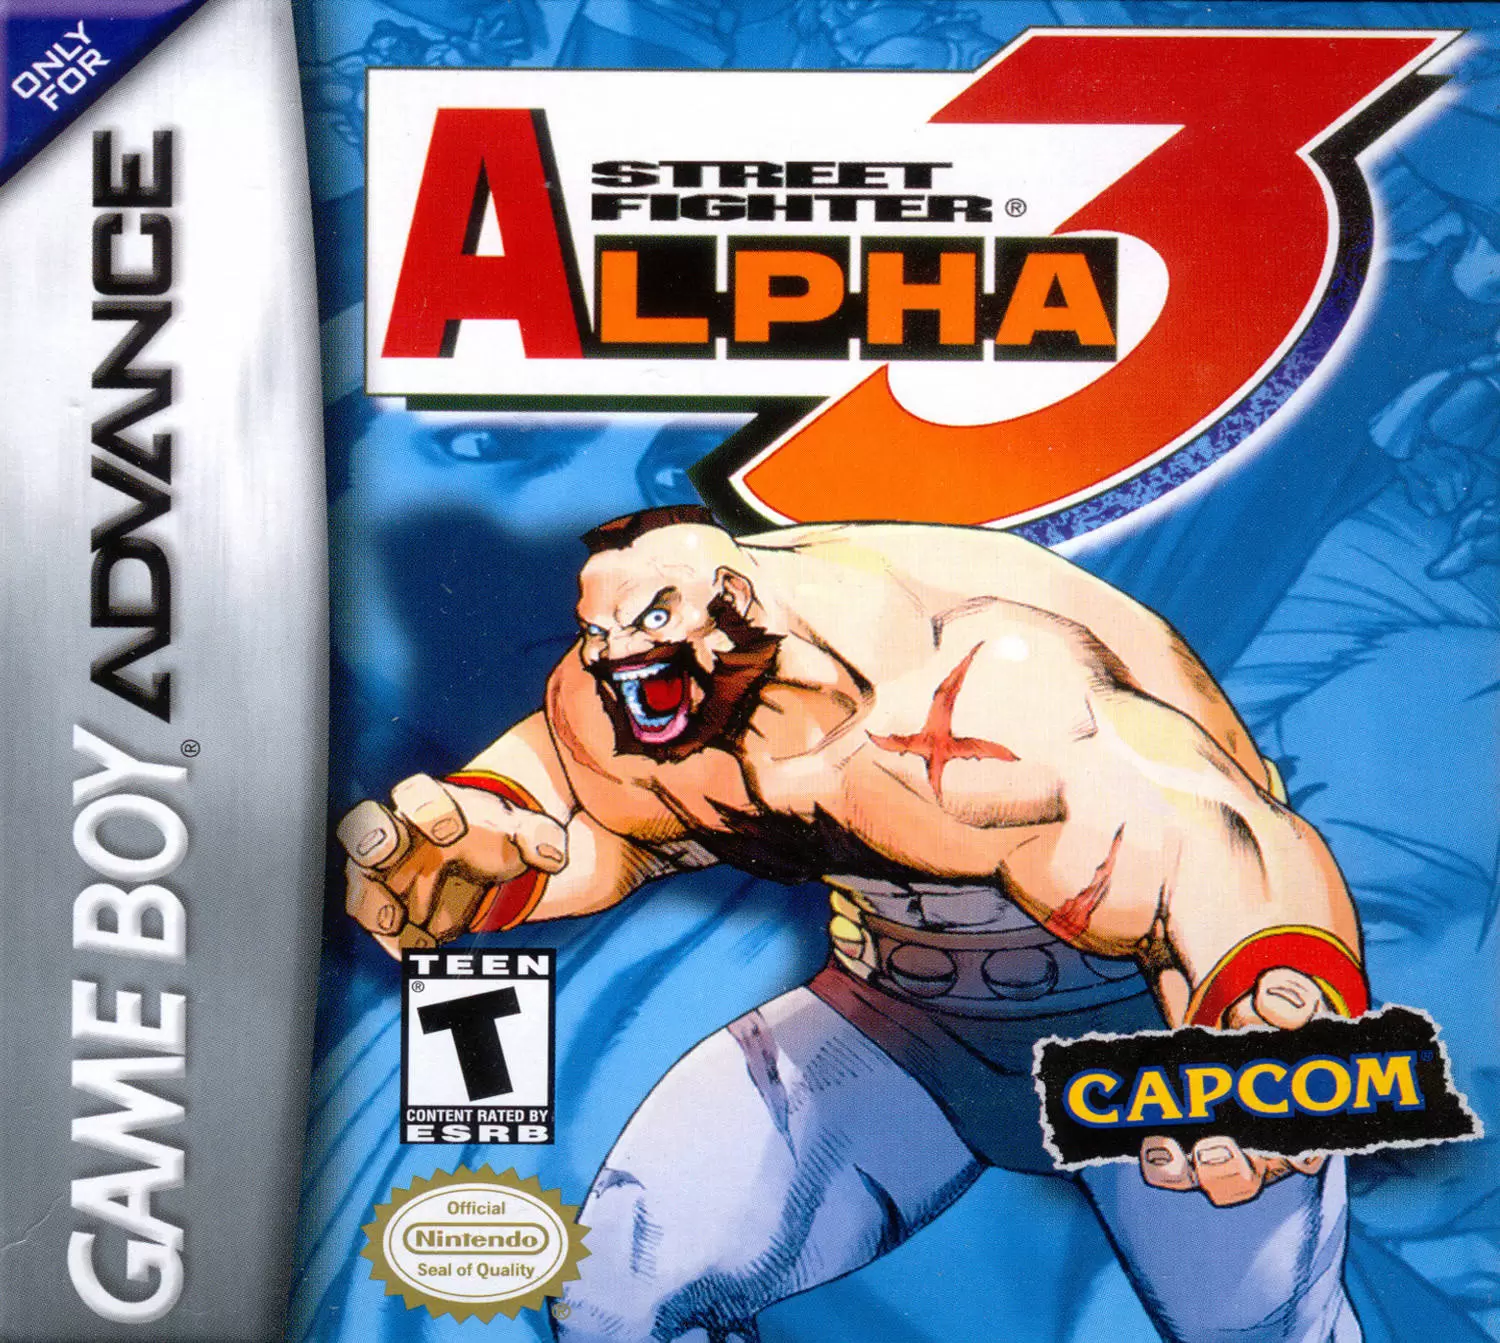 Game Boy Advance Games - Street Fighter Alpha 3